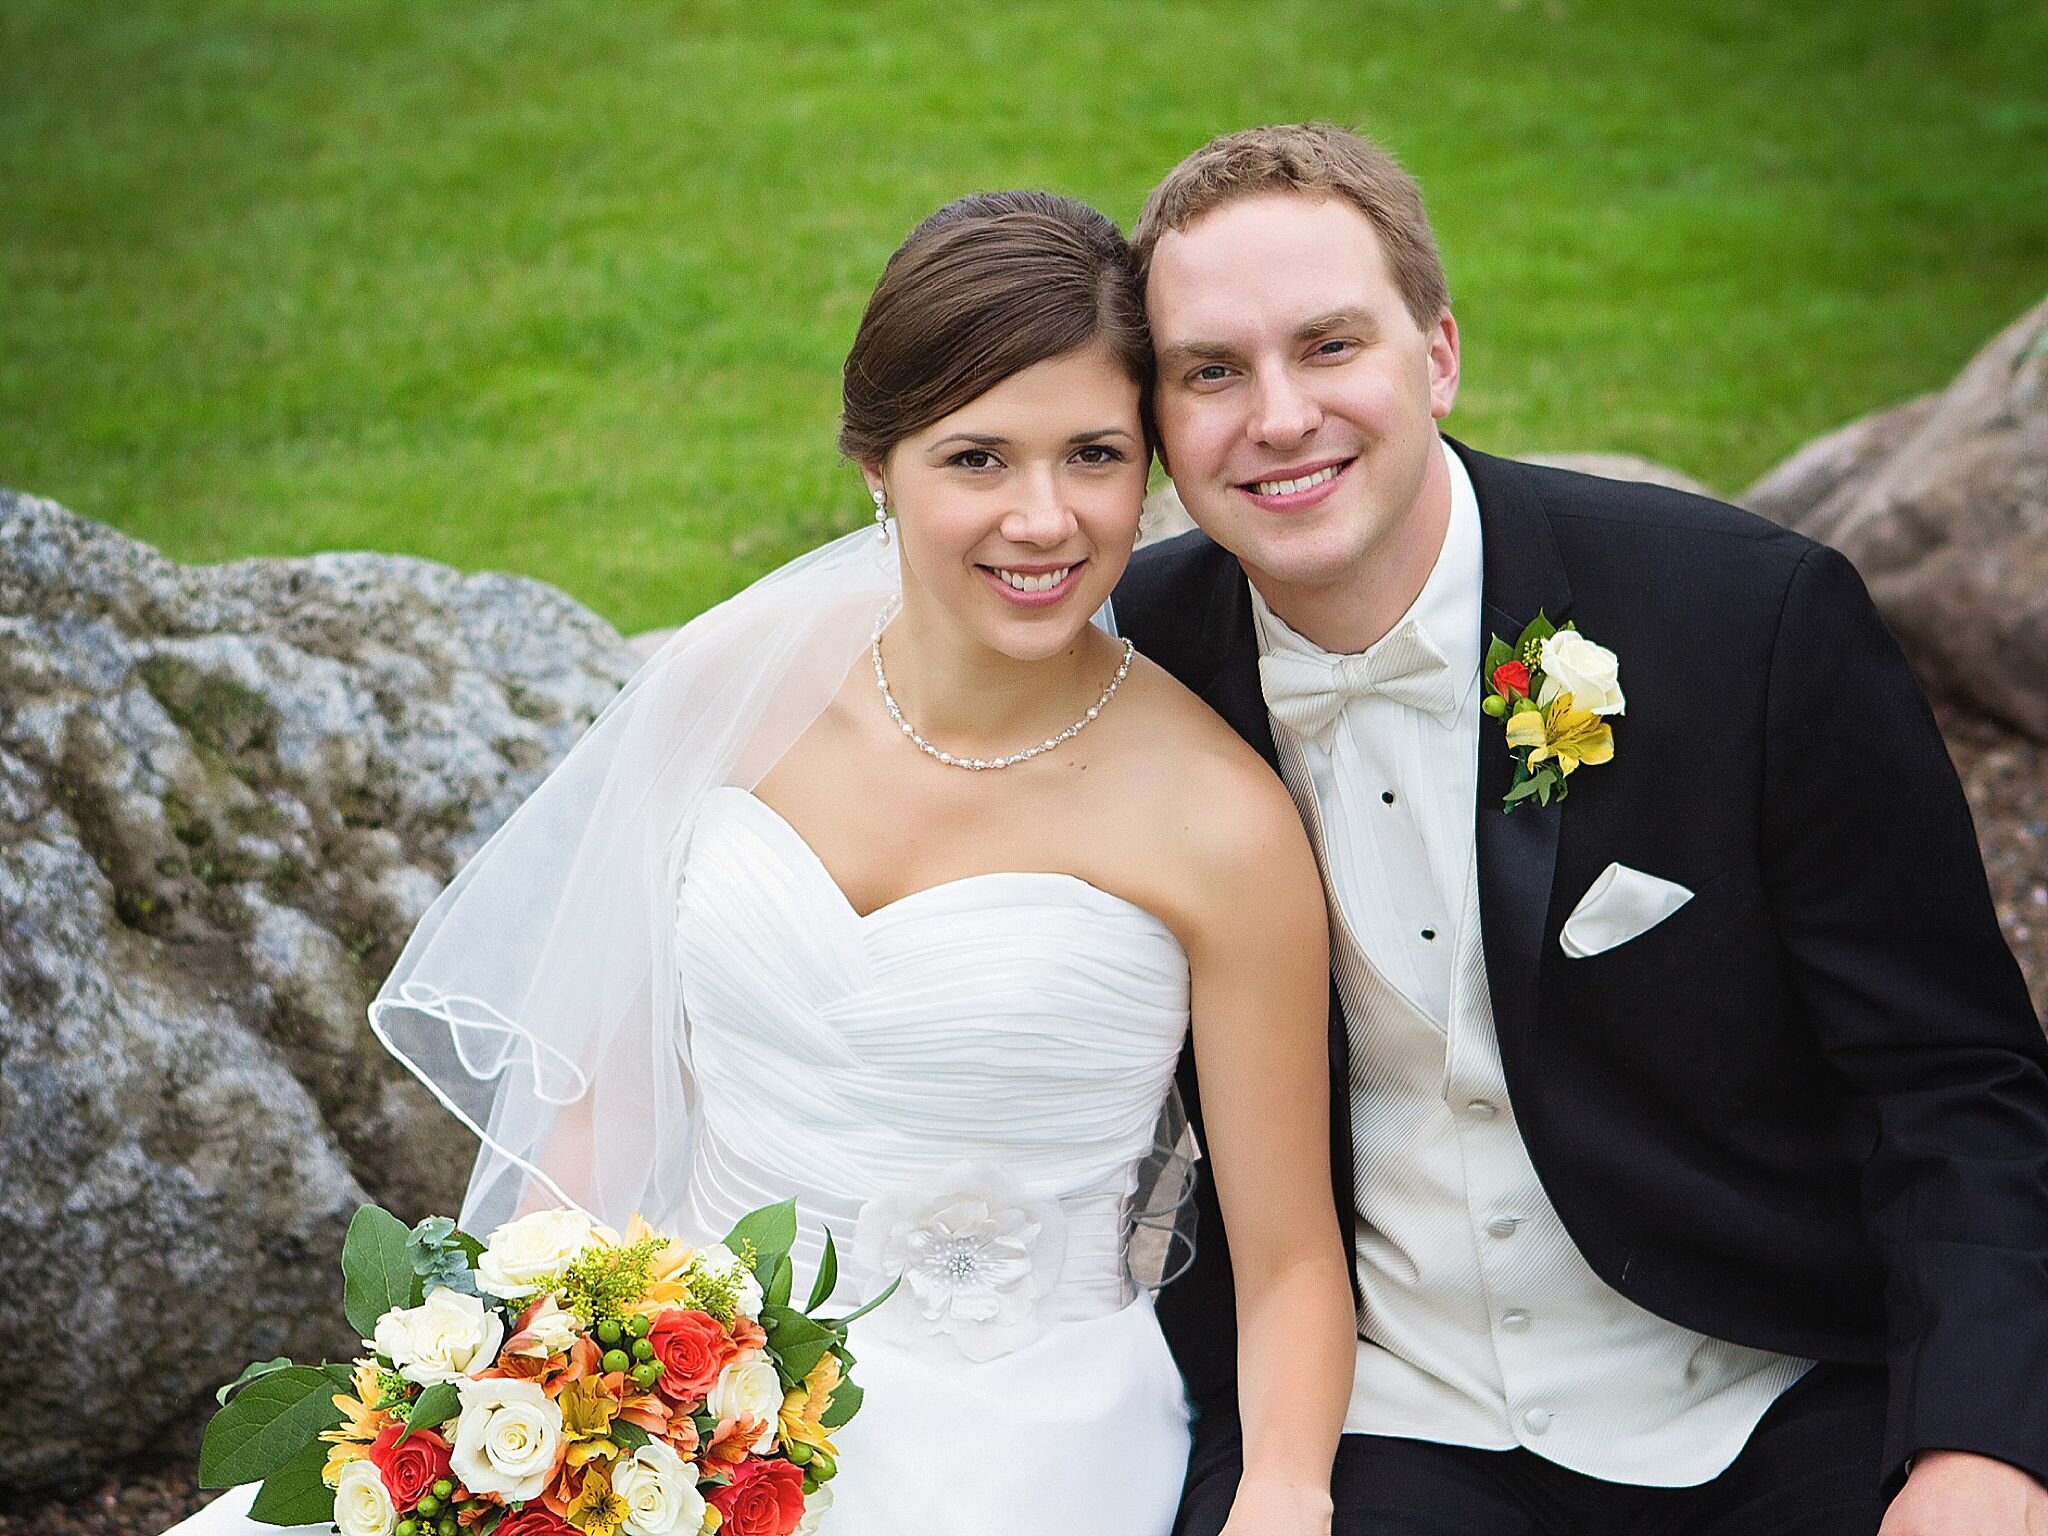 Cj-Photography-Wisconsin-Weddings_0006.jpg